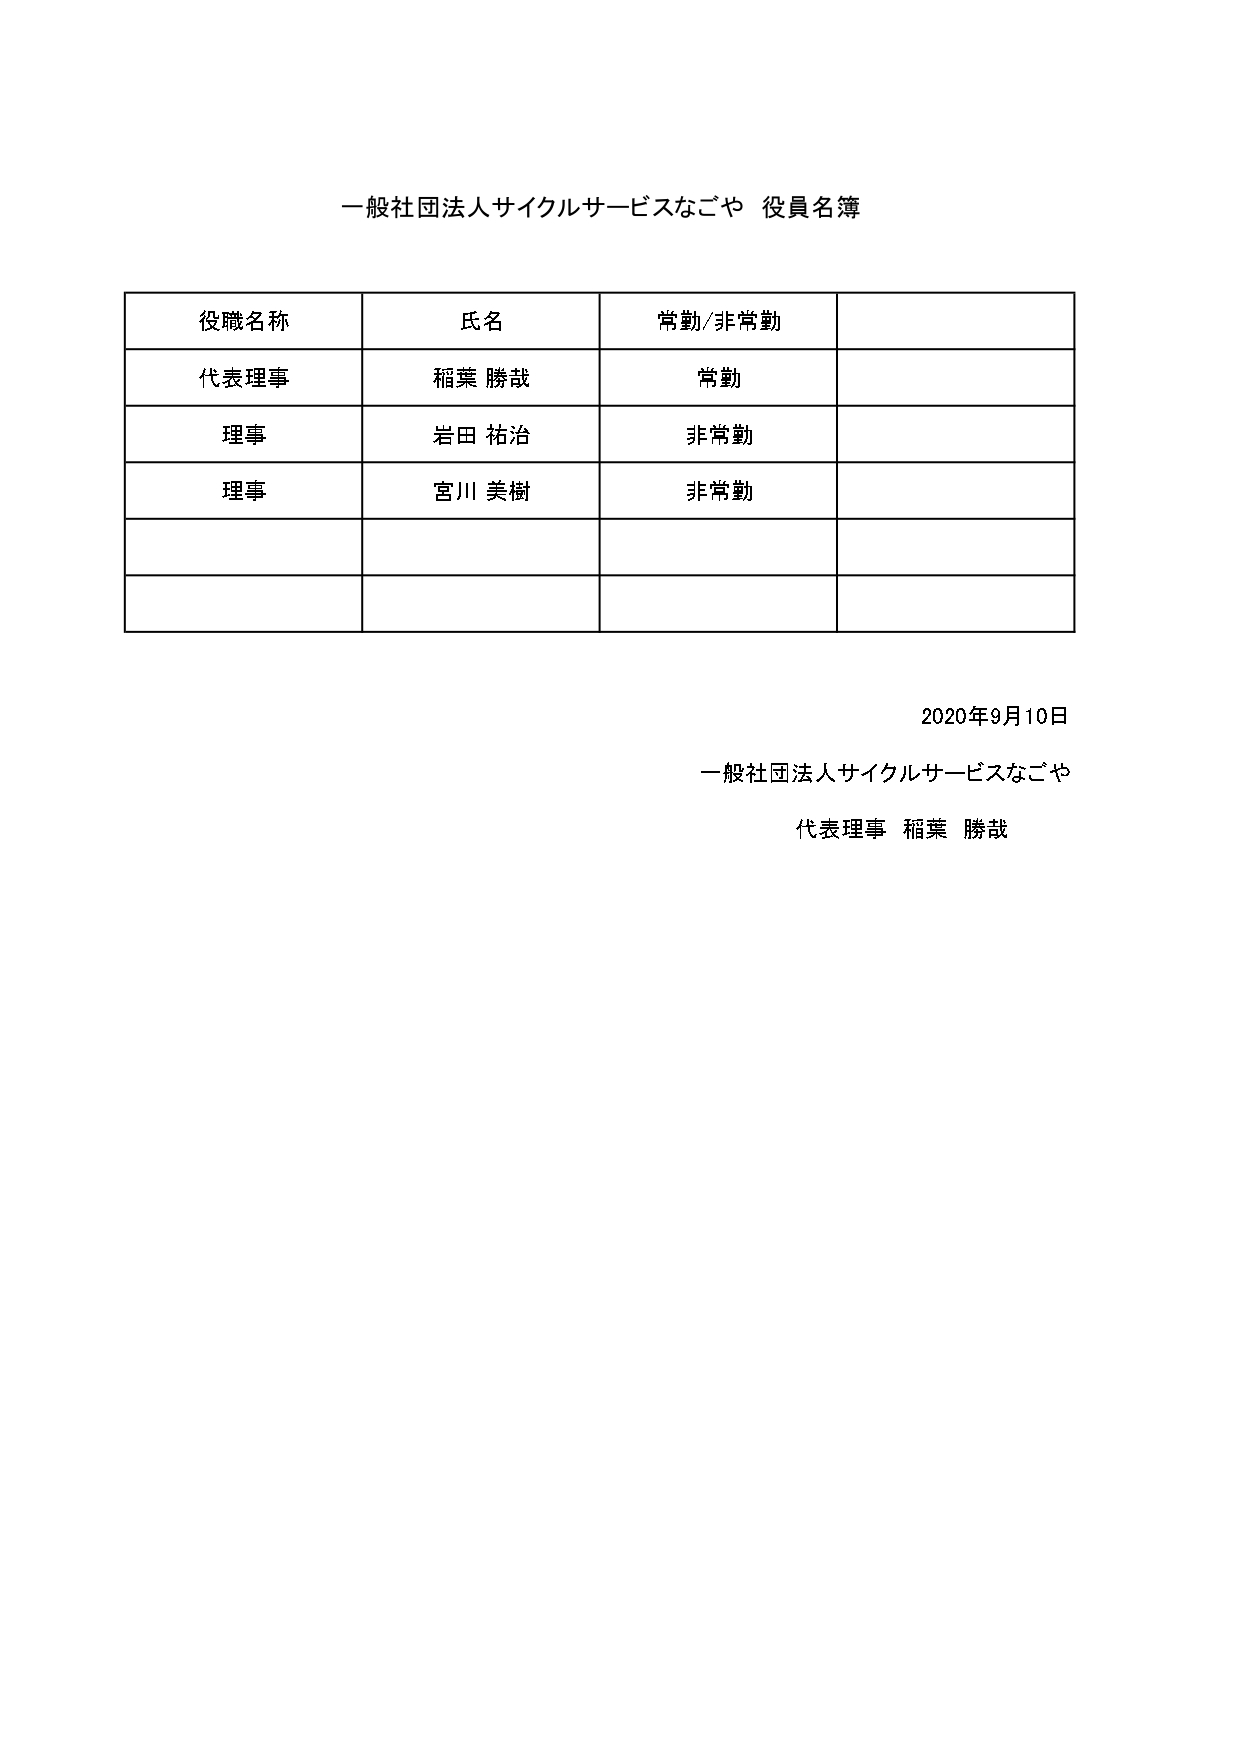 役員名簿　2020年度_page-0001 (1)